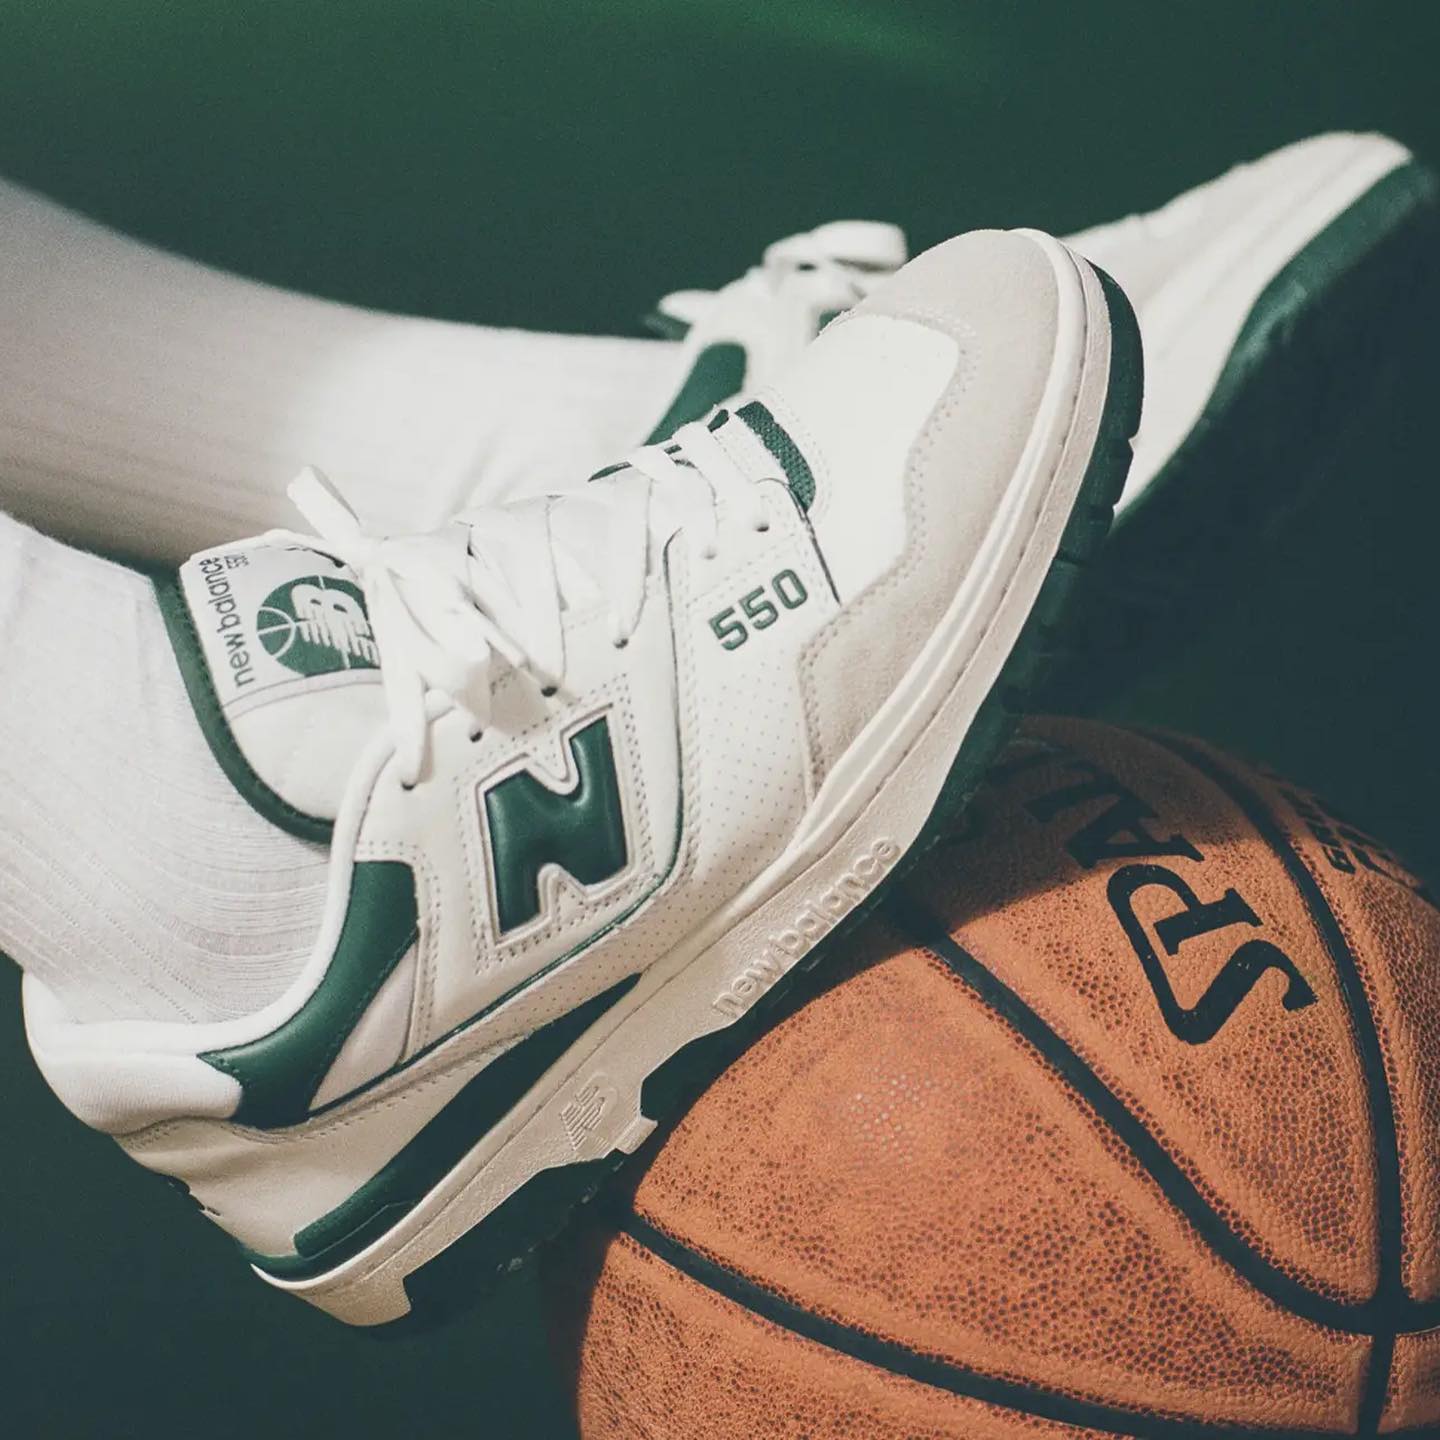 New Balance Shoes for Basketball Shiny Lemons